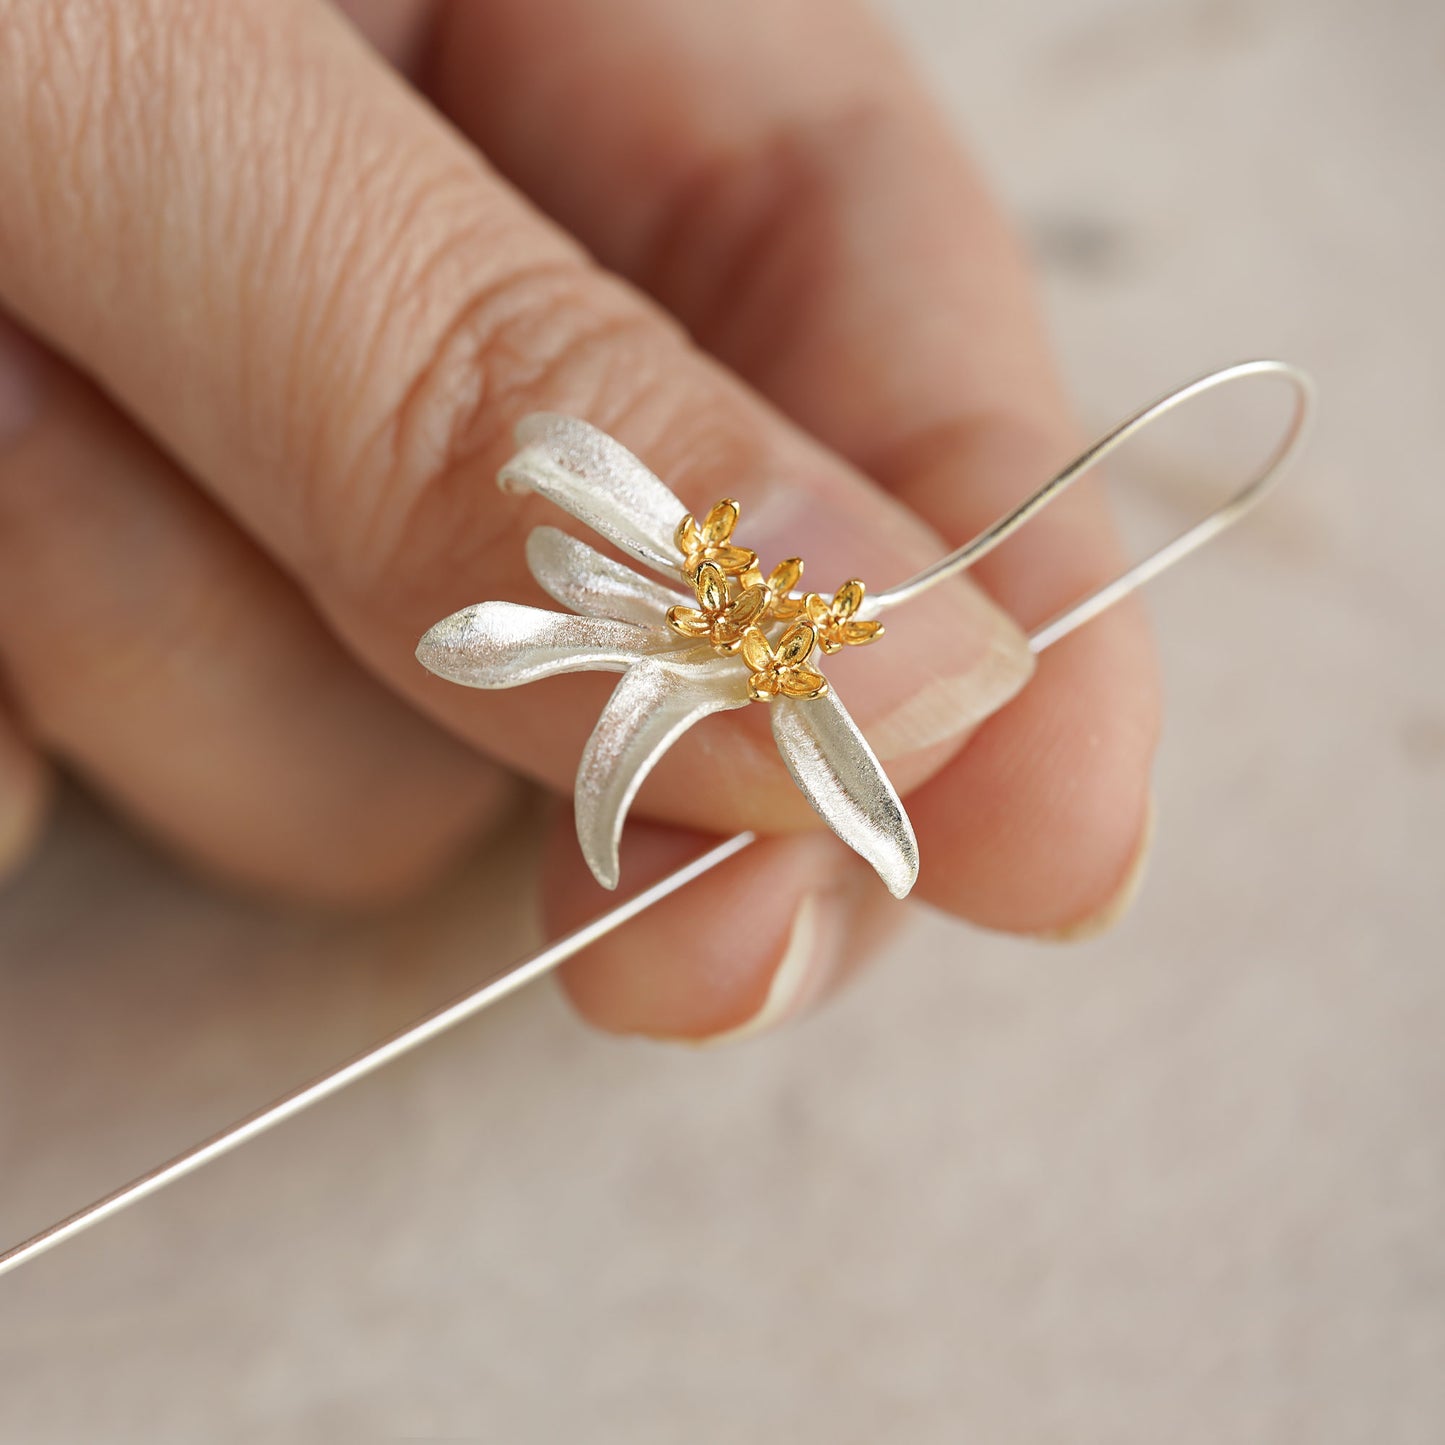 Holding a flower earring